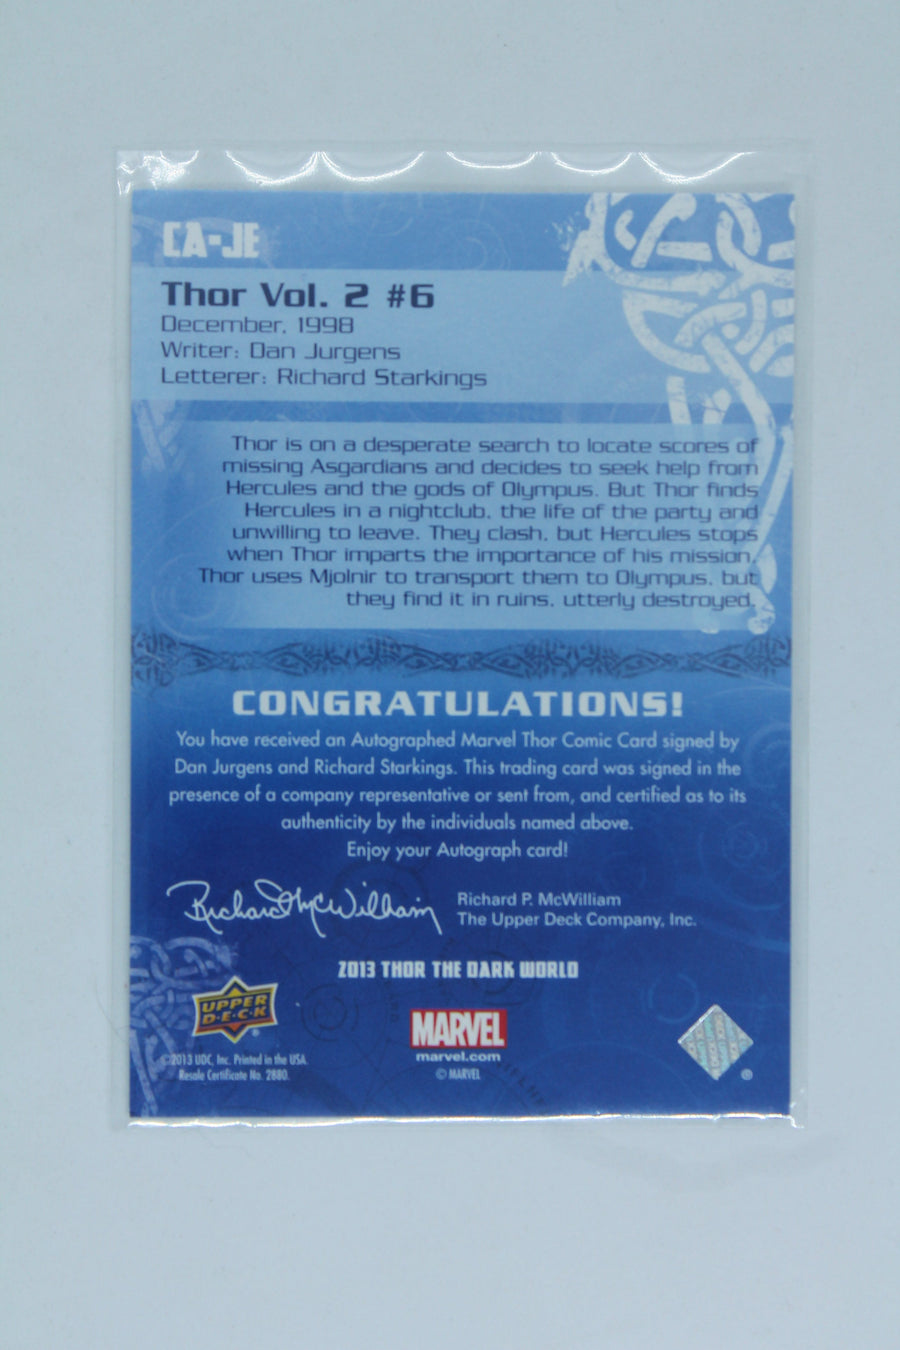 2013 Upper Deck Marvel Thor: The Dark World - Cover Autographs #CA-JE Thor Vol. 2 #6 by Dan Jurgens, Richard Starkings